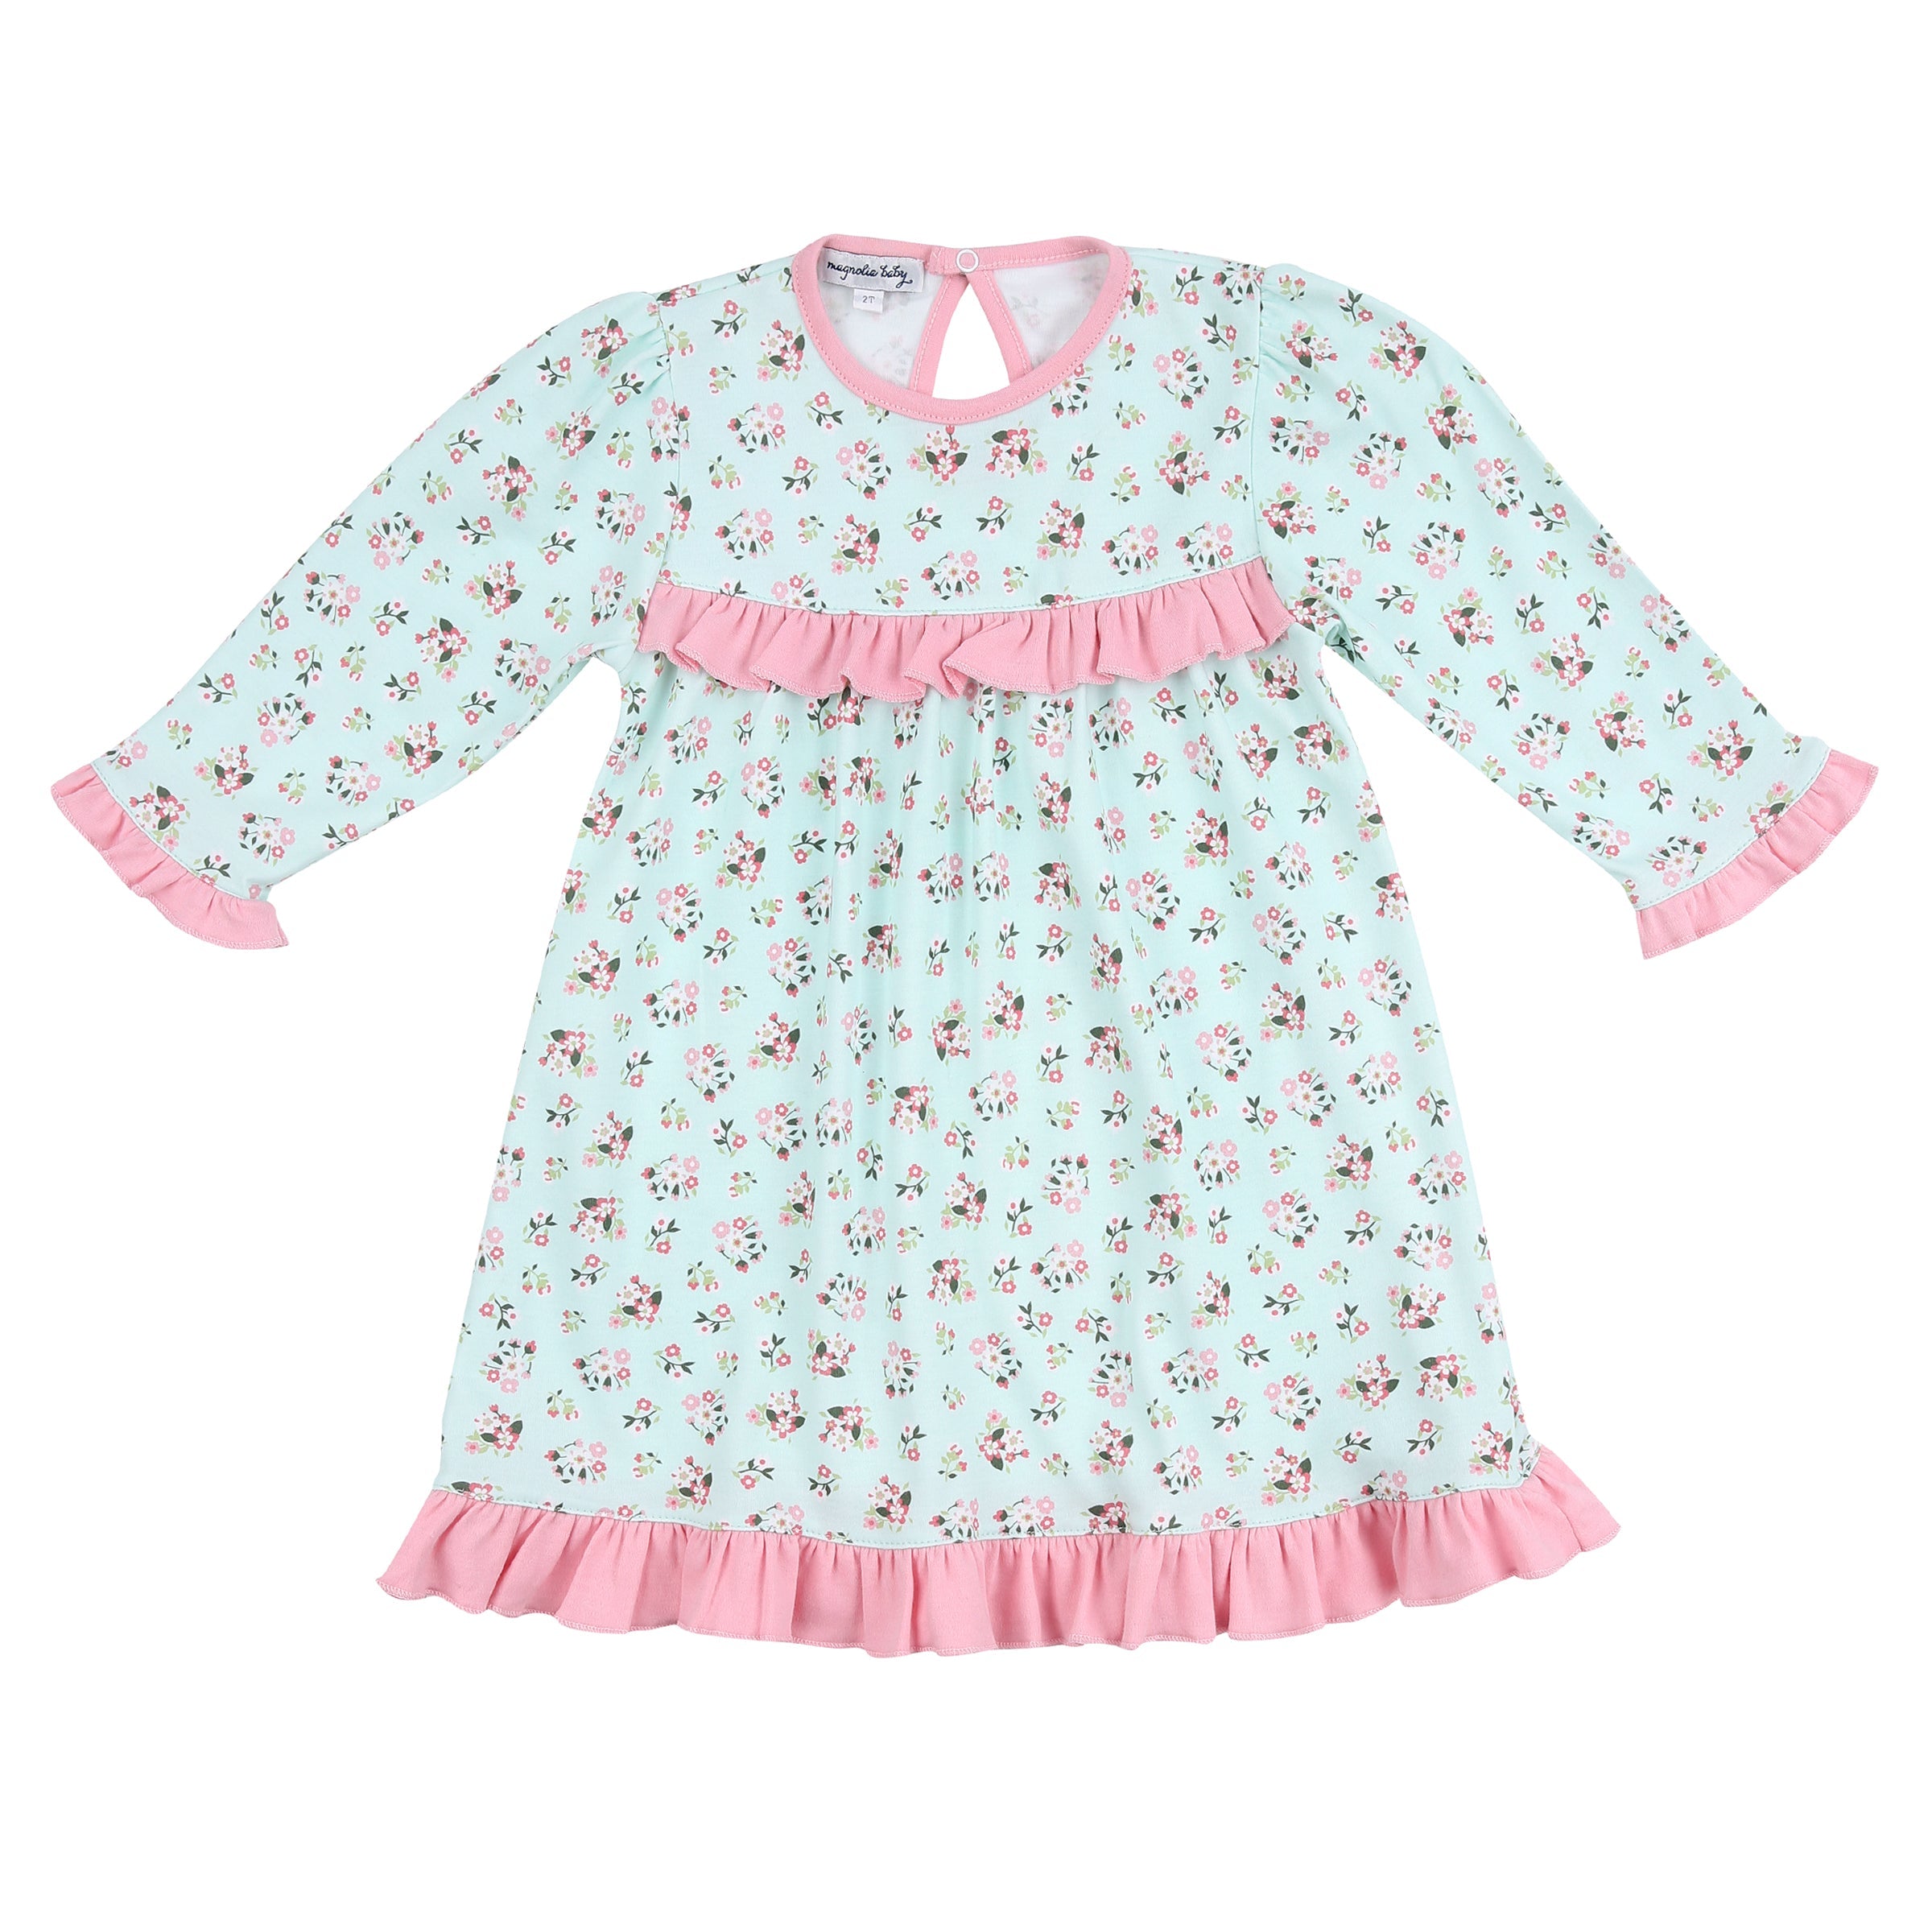 Aurora's Classics Toddler Dress